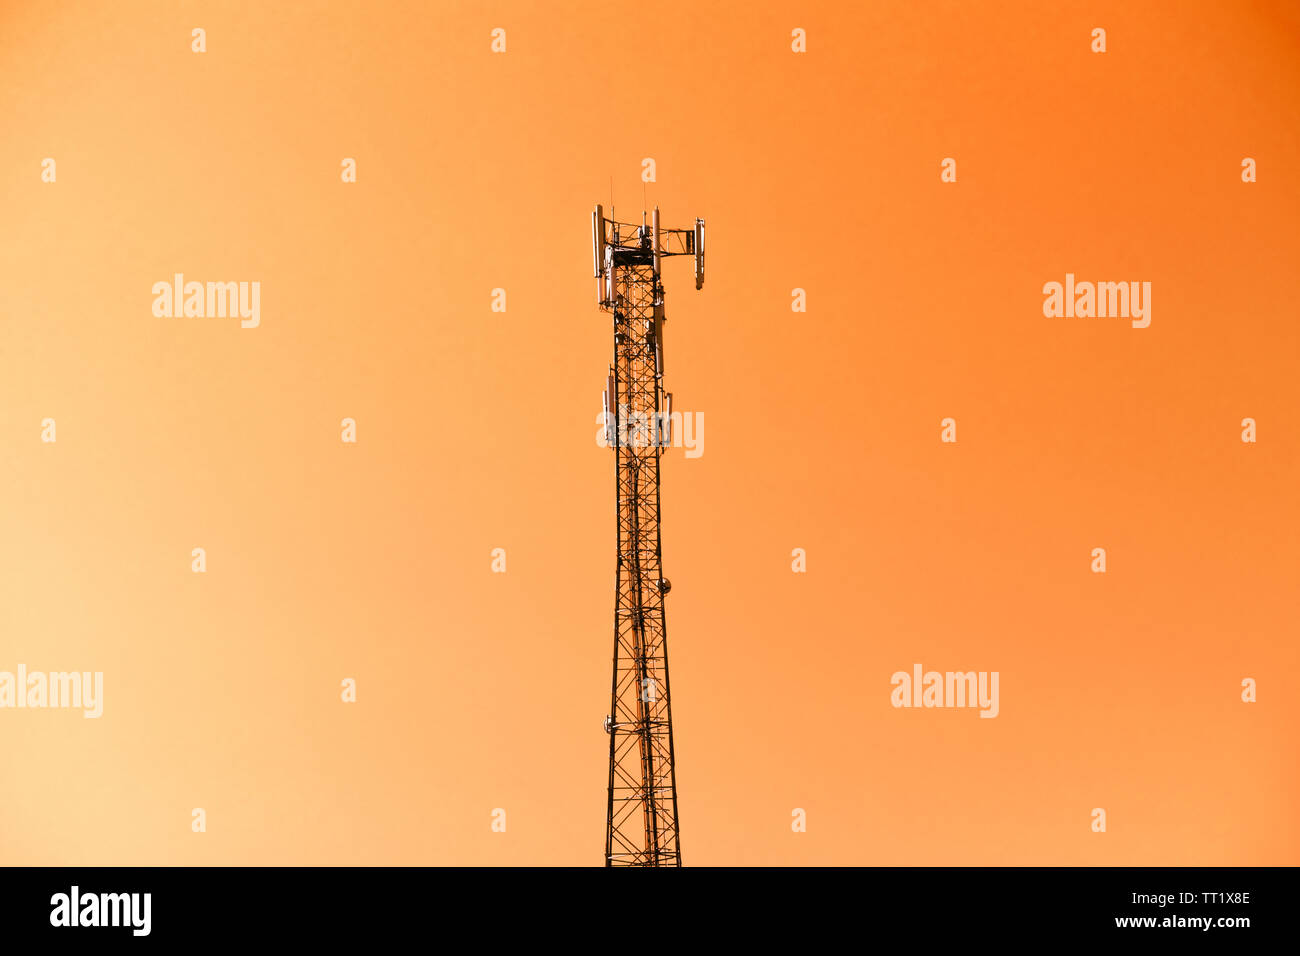 Mobile telecommunication cellular radio tower antenna Stock Photo